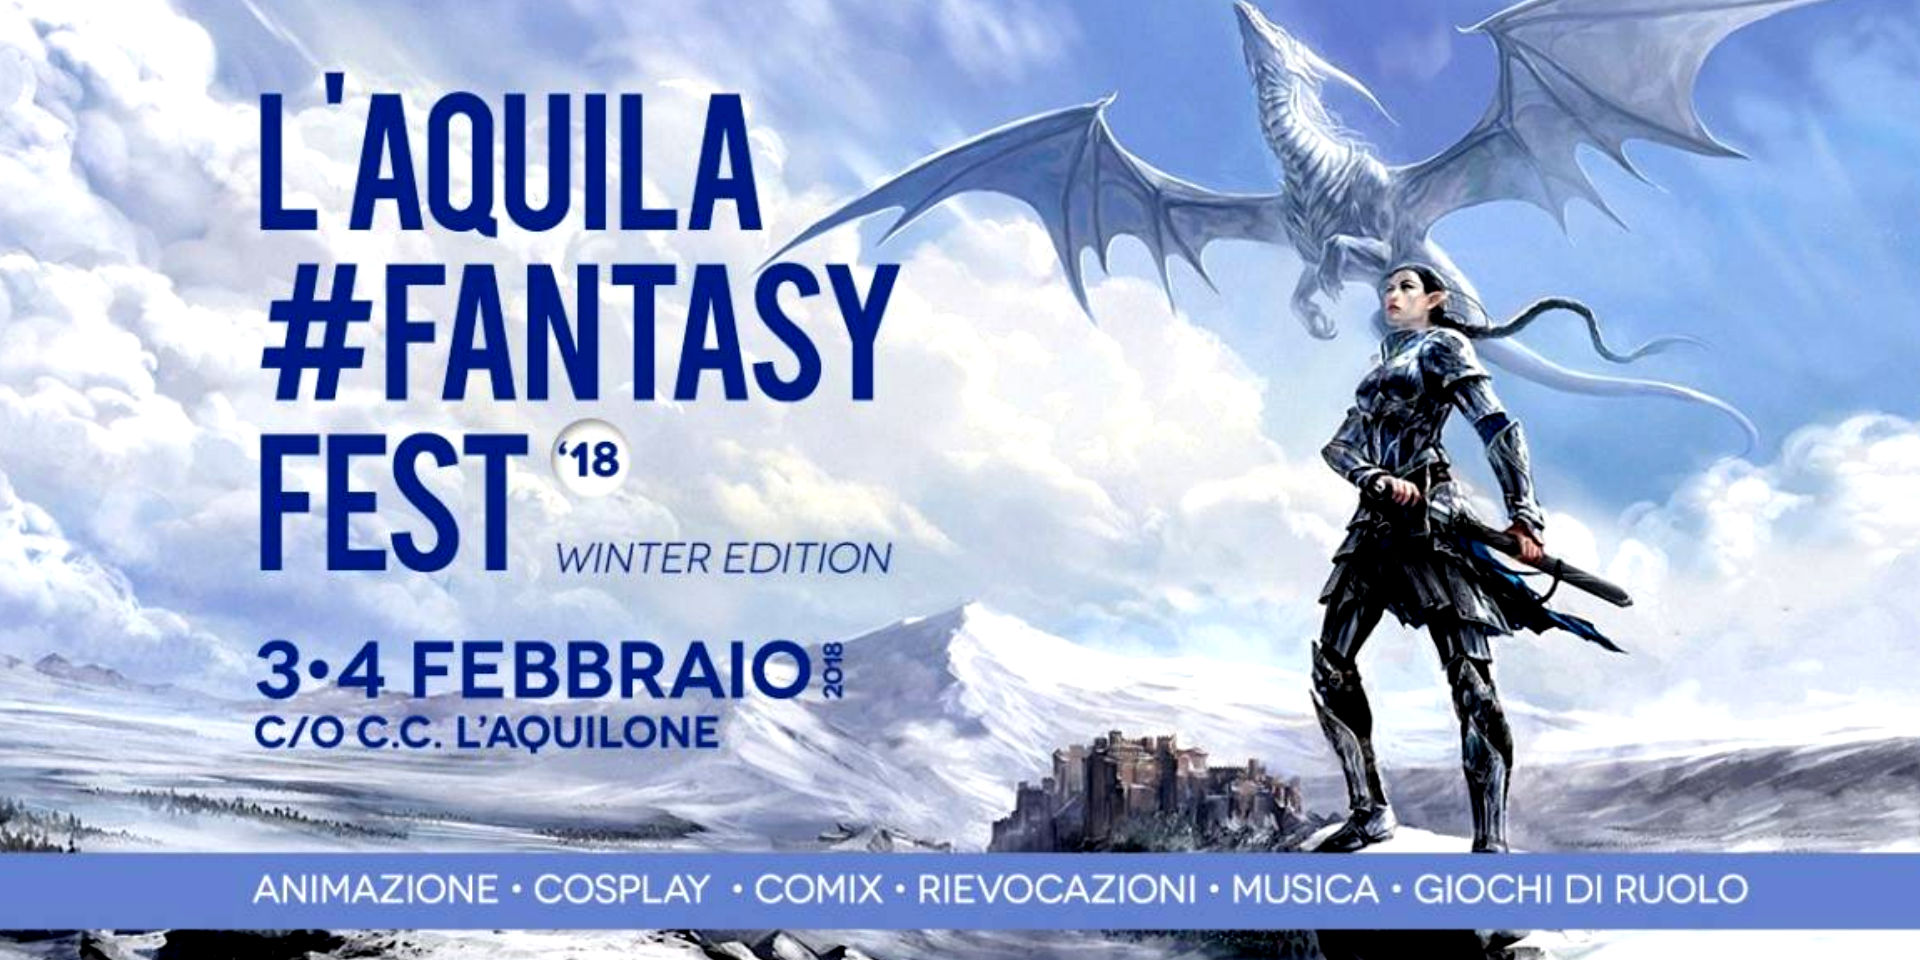 L’Aquila Fantasy Fest ’18 – winter edition